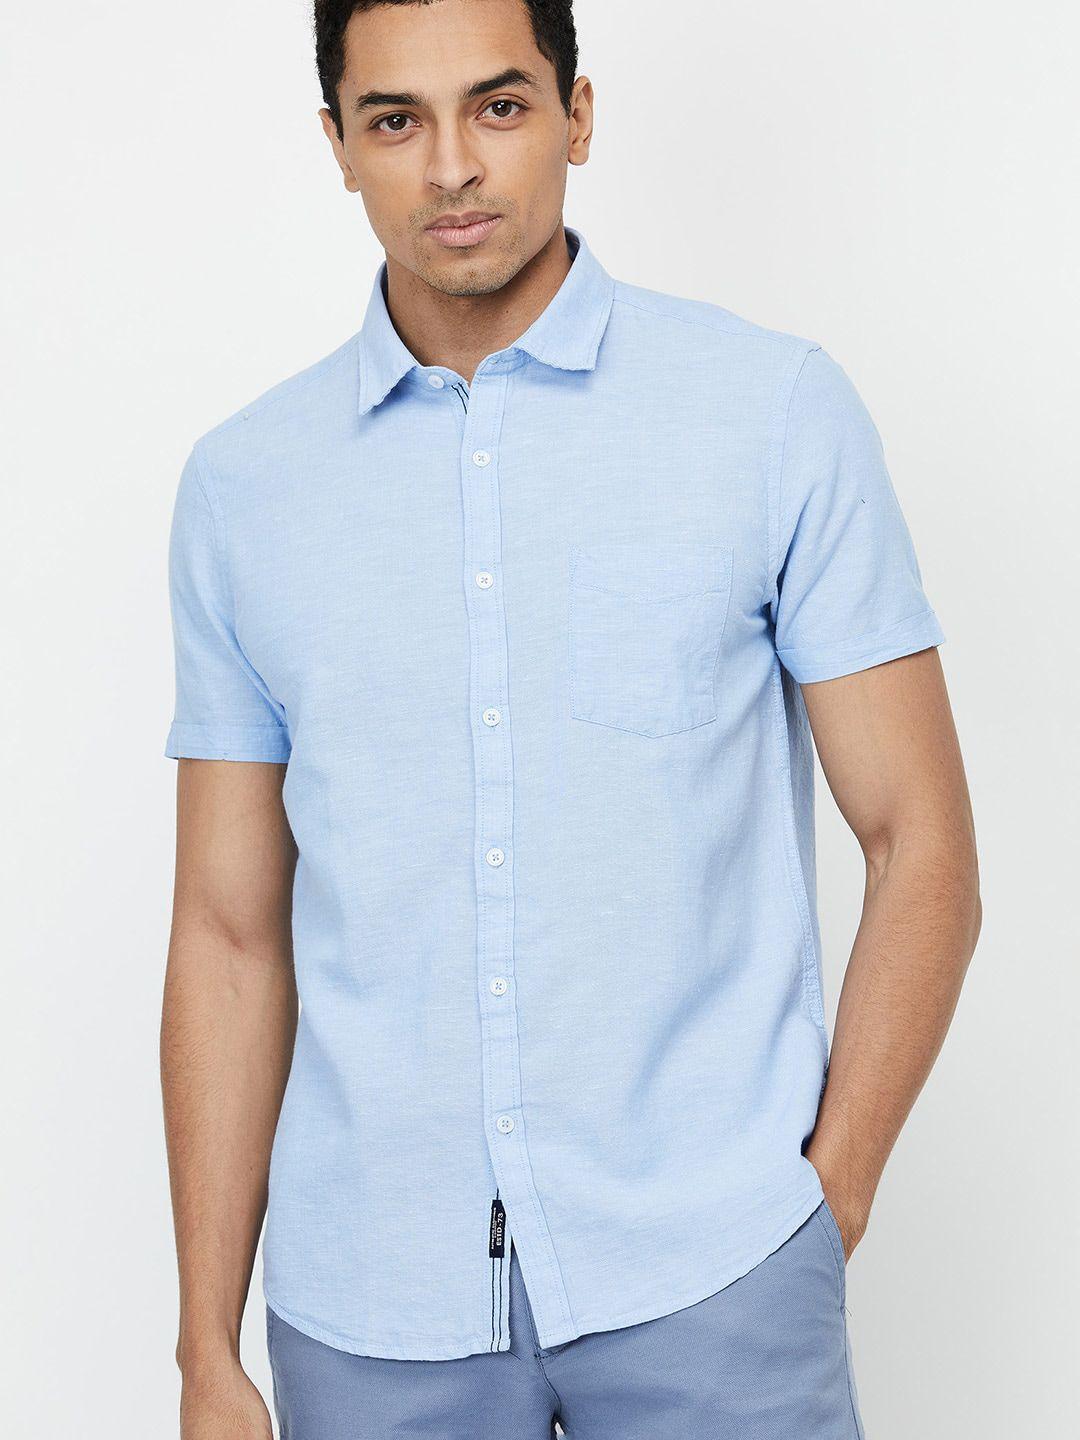 max men blue solid cotton casual shirt